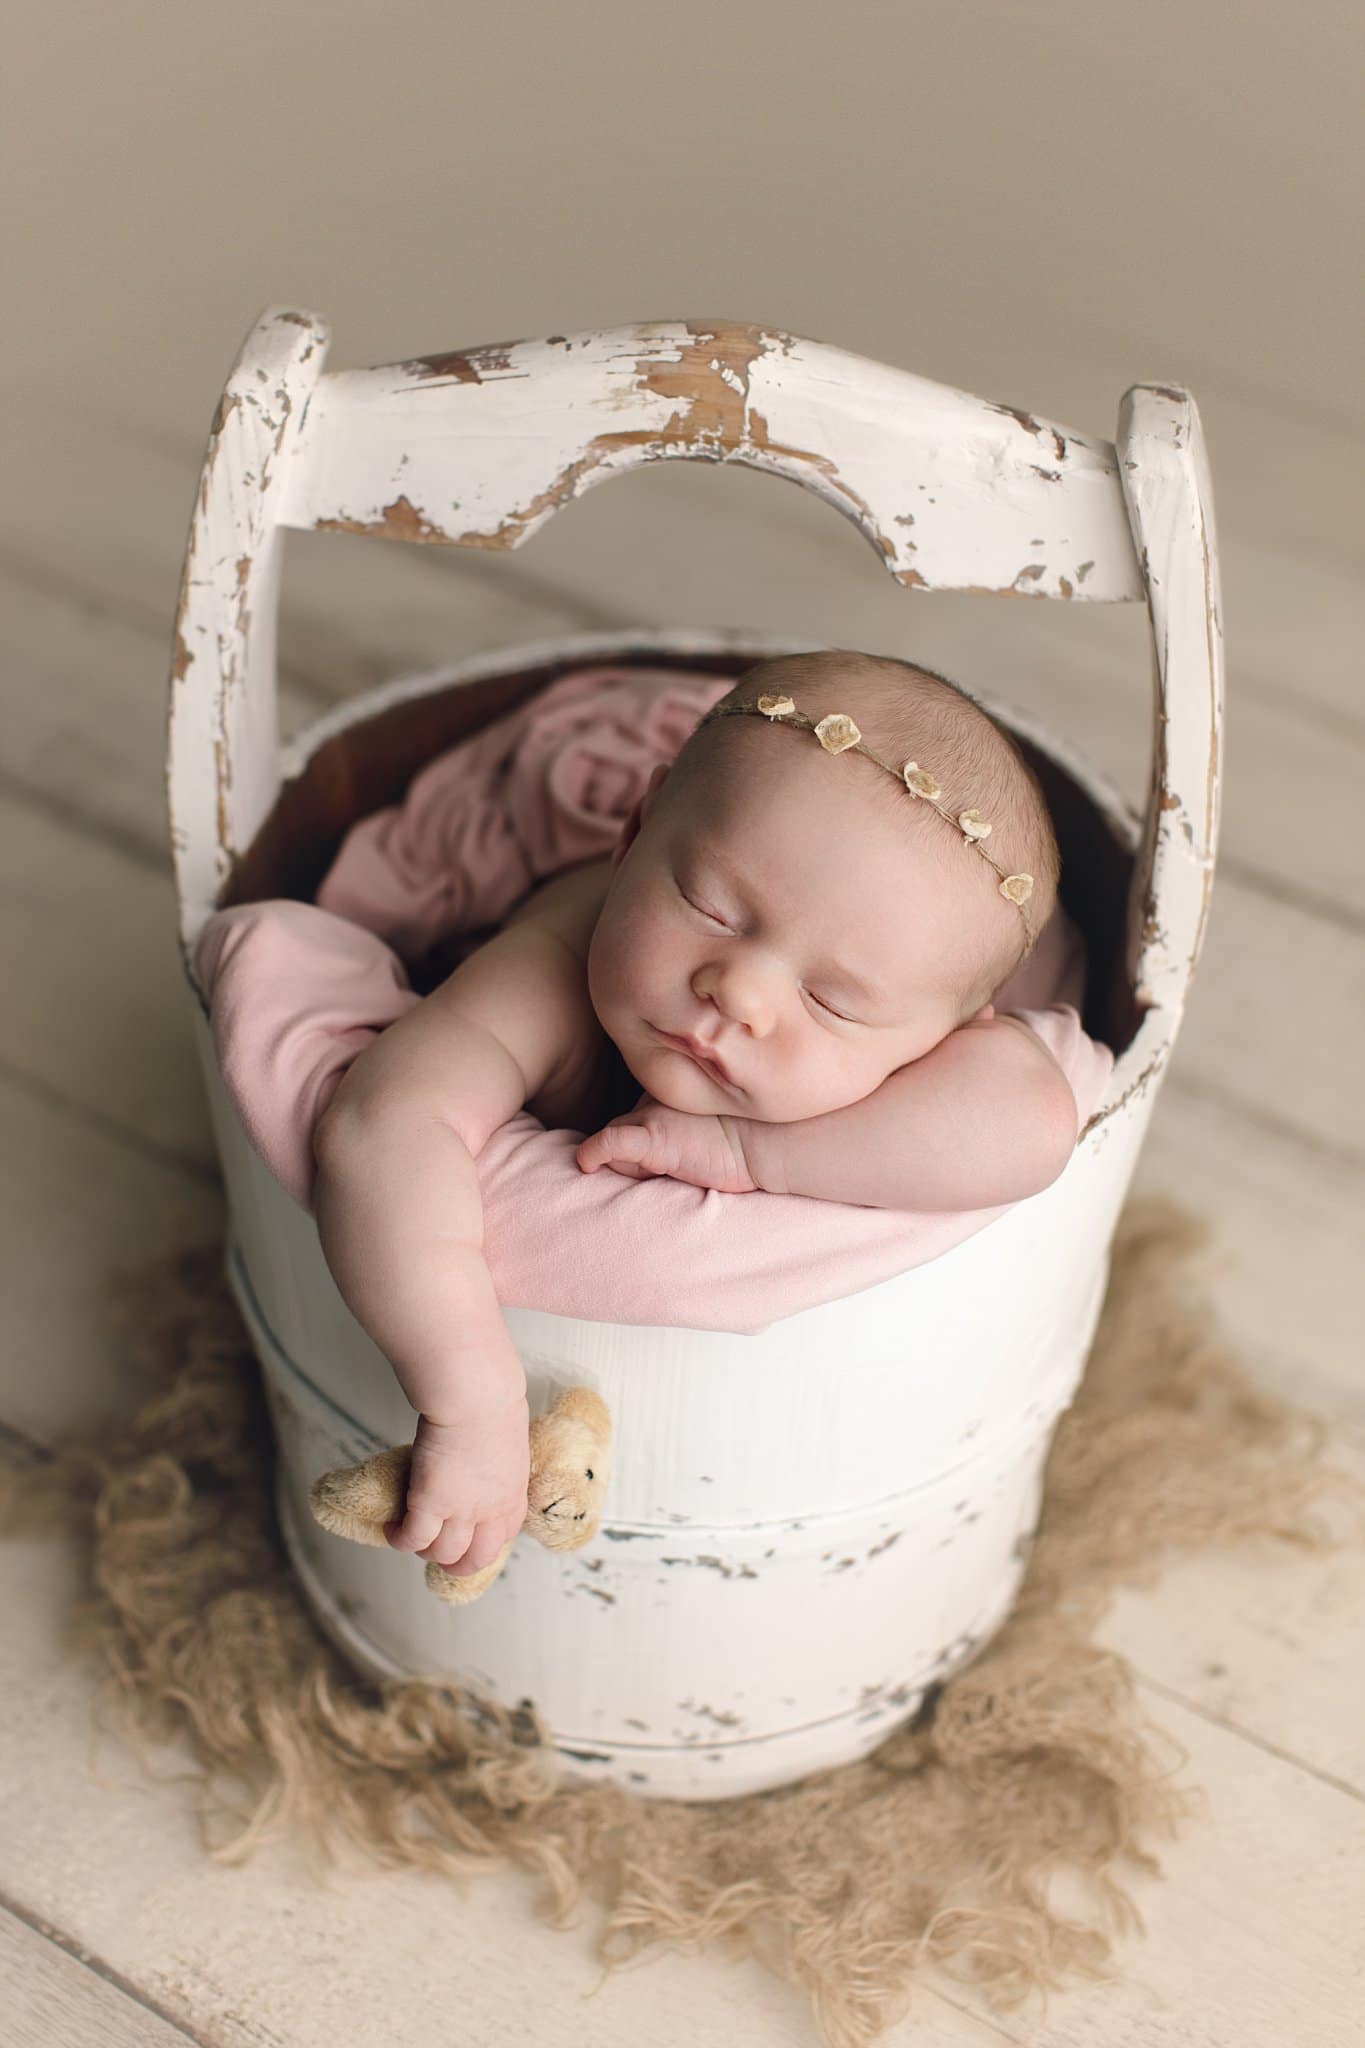 newborn baby girl sleeping in water bucket holding teddy bear with arm dangling